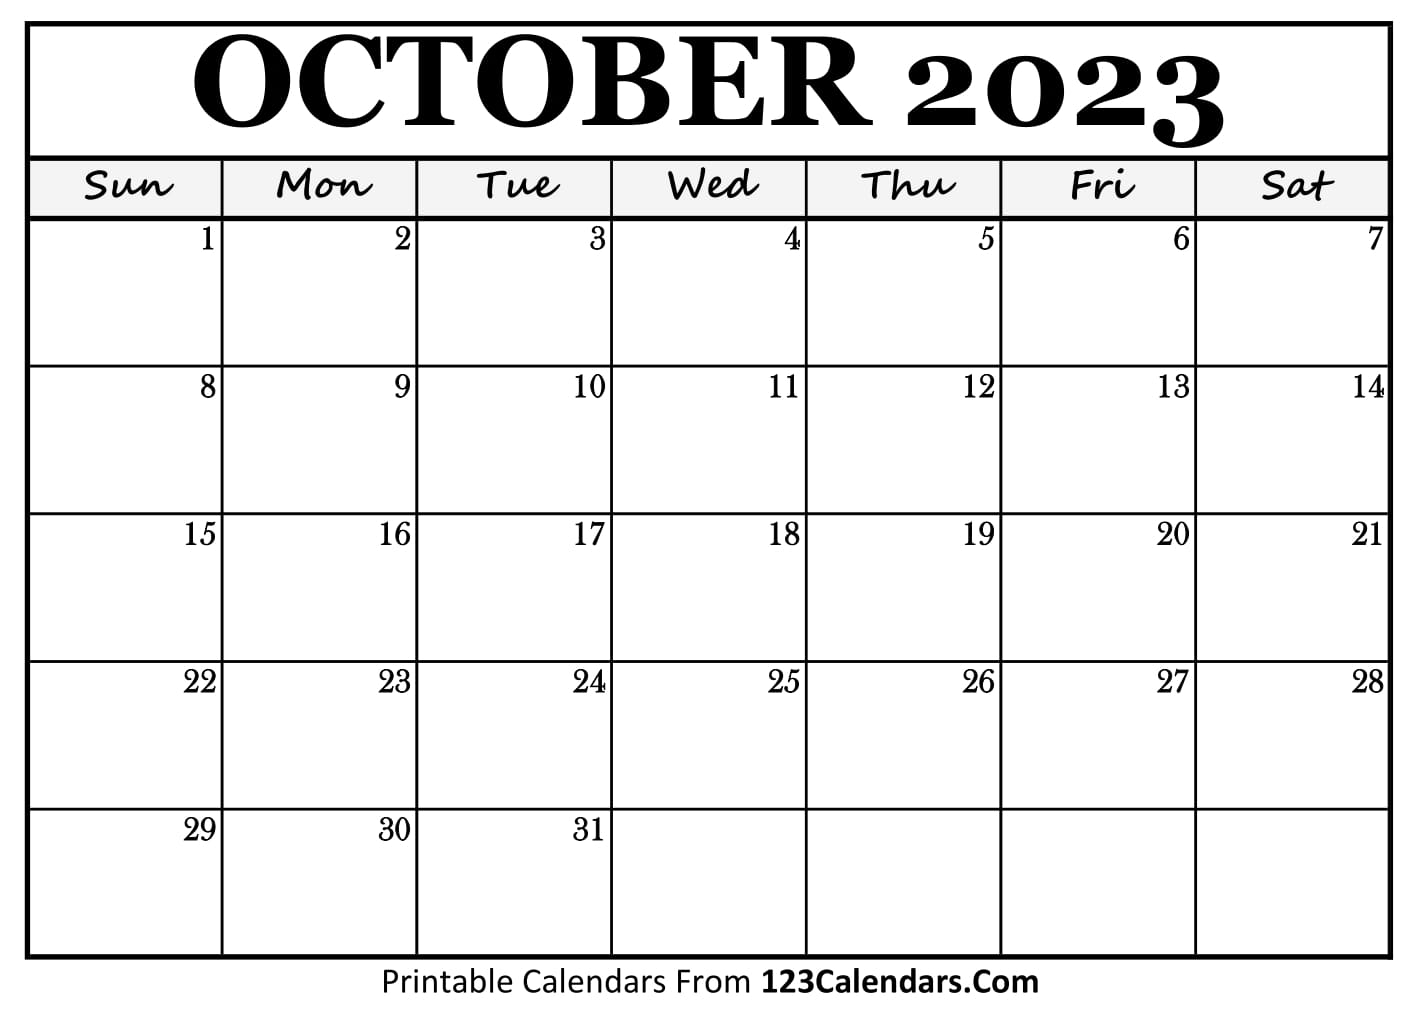 Printable October 2023 Calendar Templates 123Calendars com